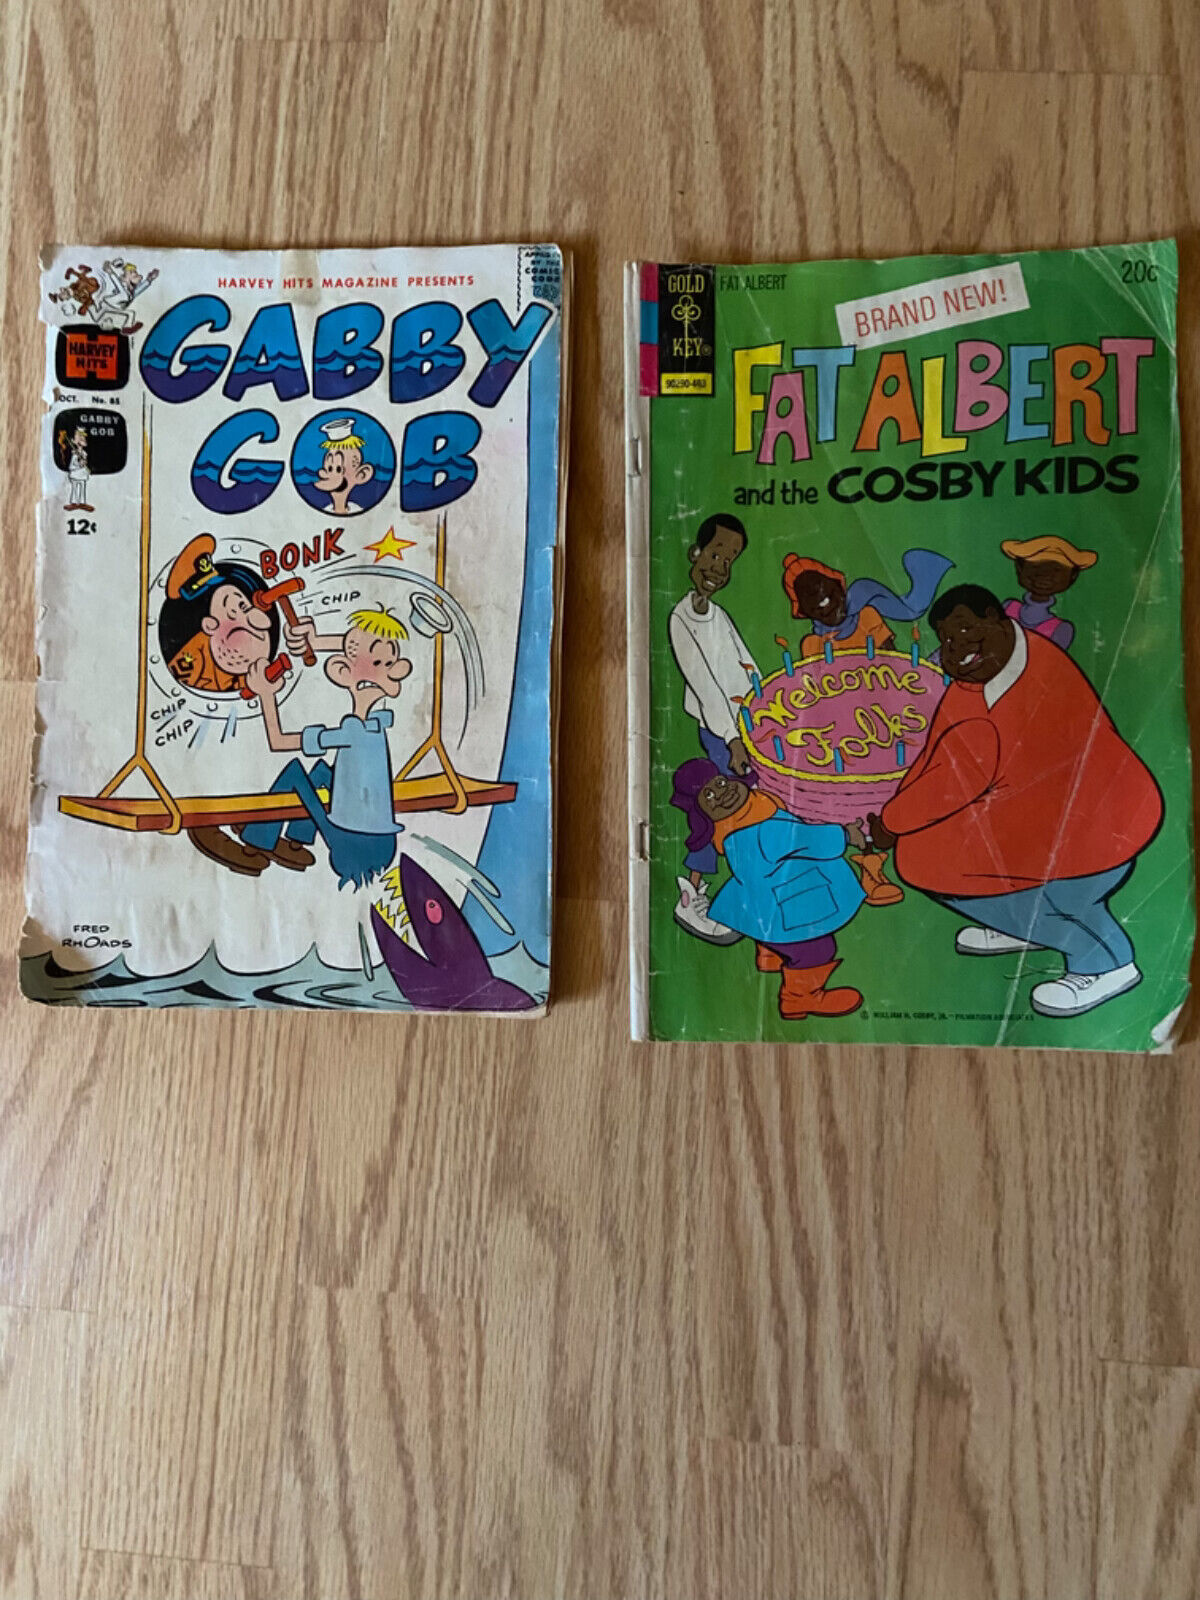 1 HARVEYHITS MAGAZINE COMIC BOOK GABBY GOB 1964 1 GOLD KEY FAT ALBERT VOL#1 1974